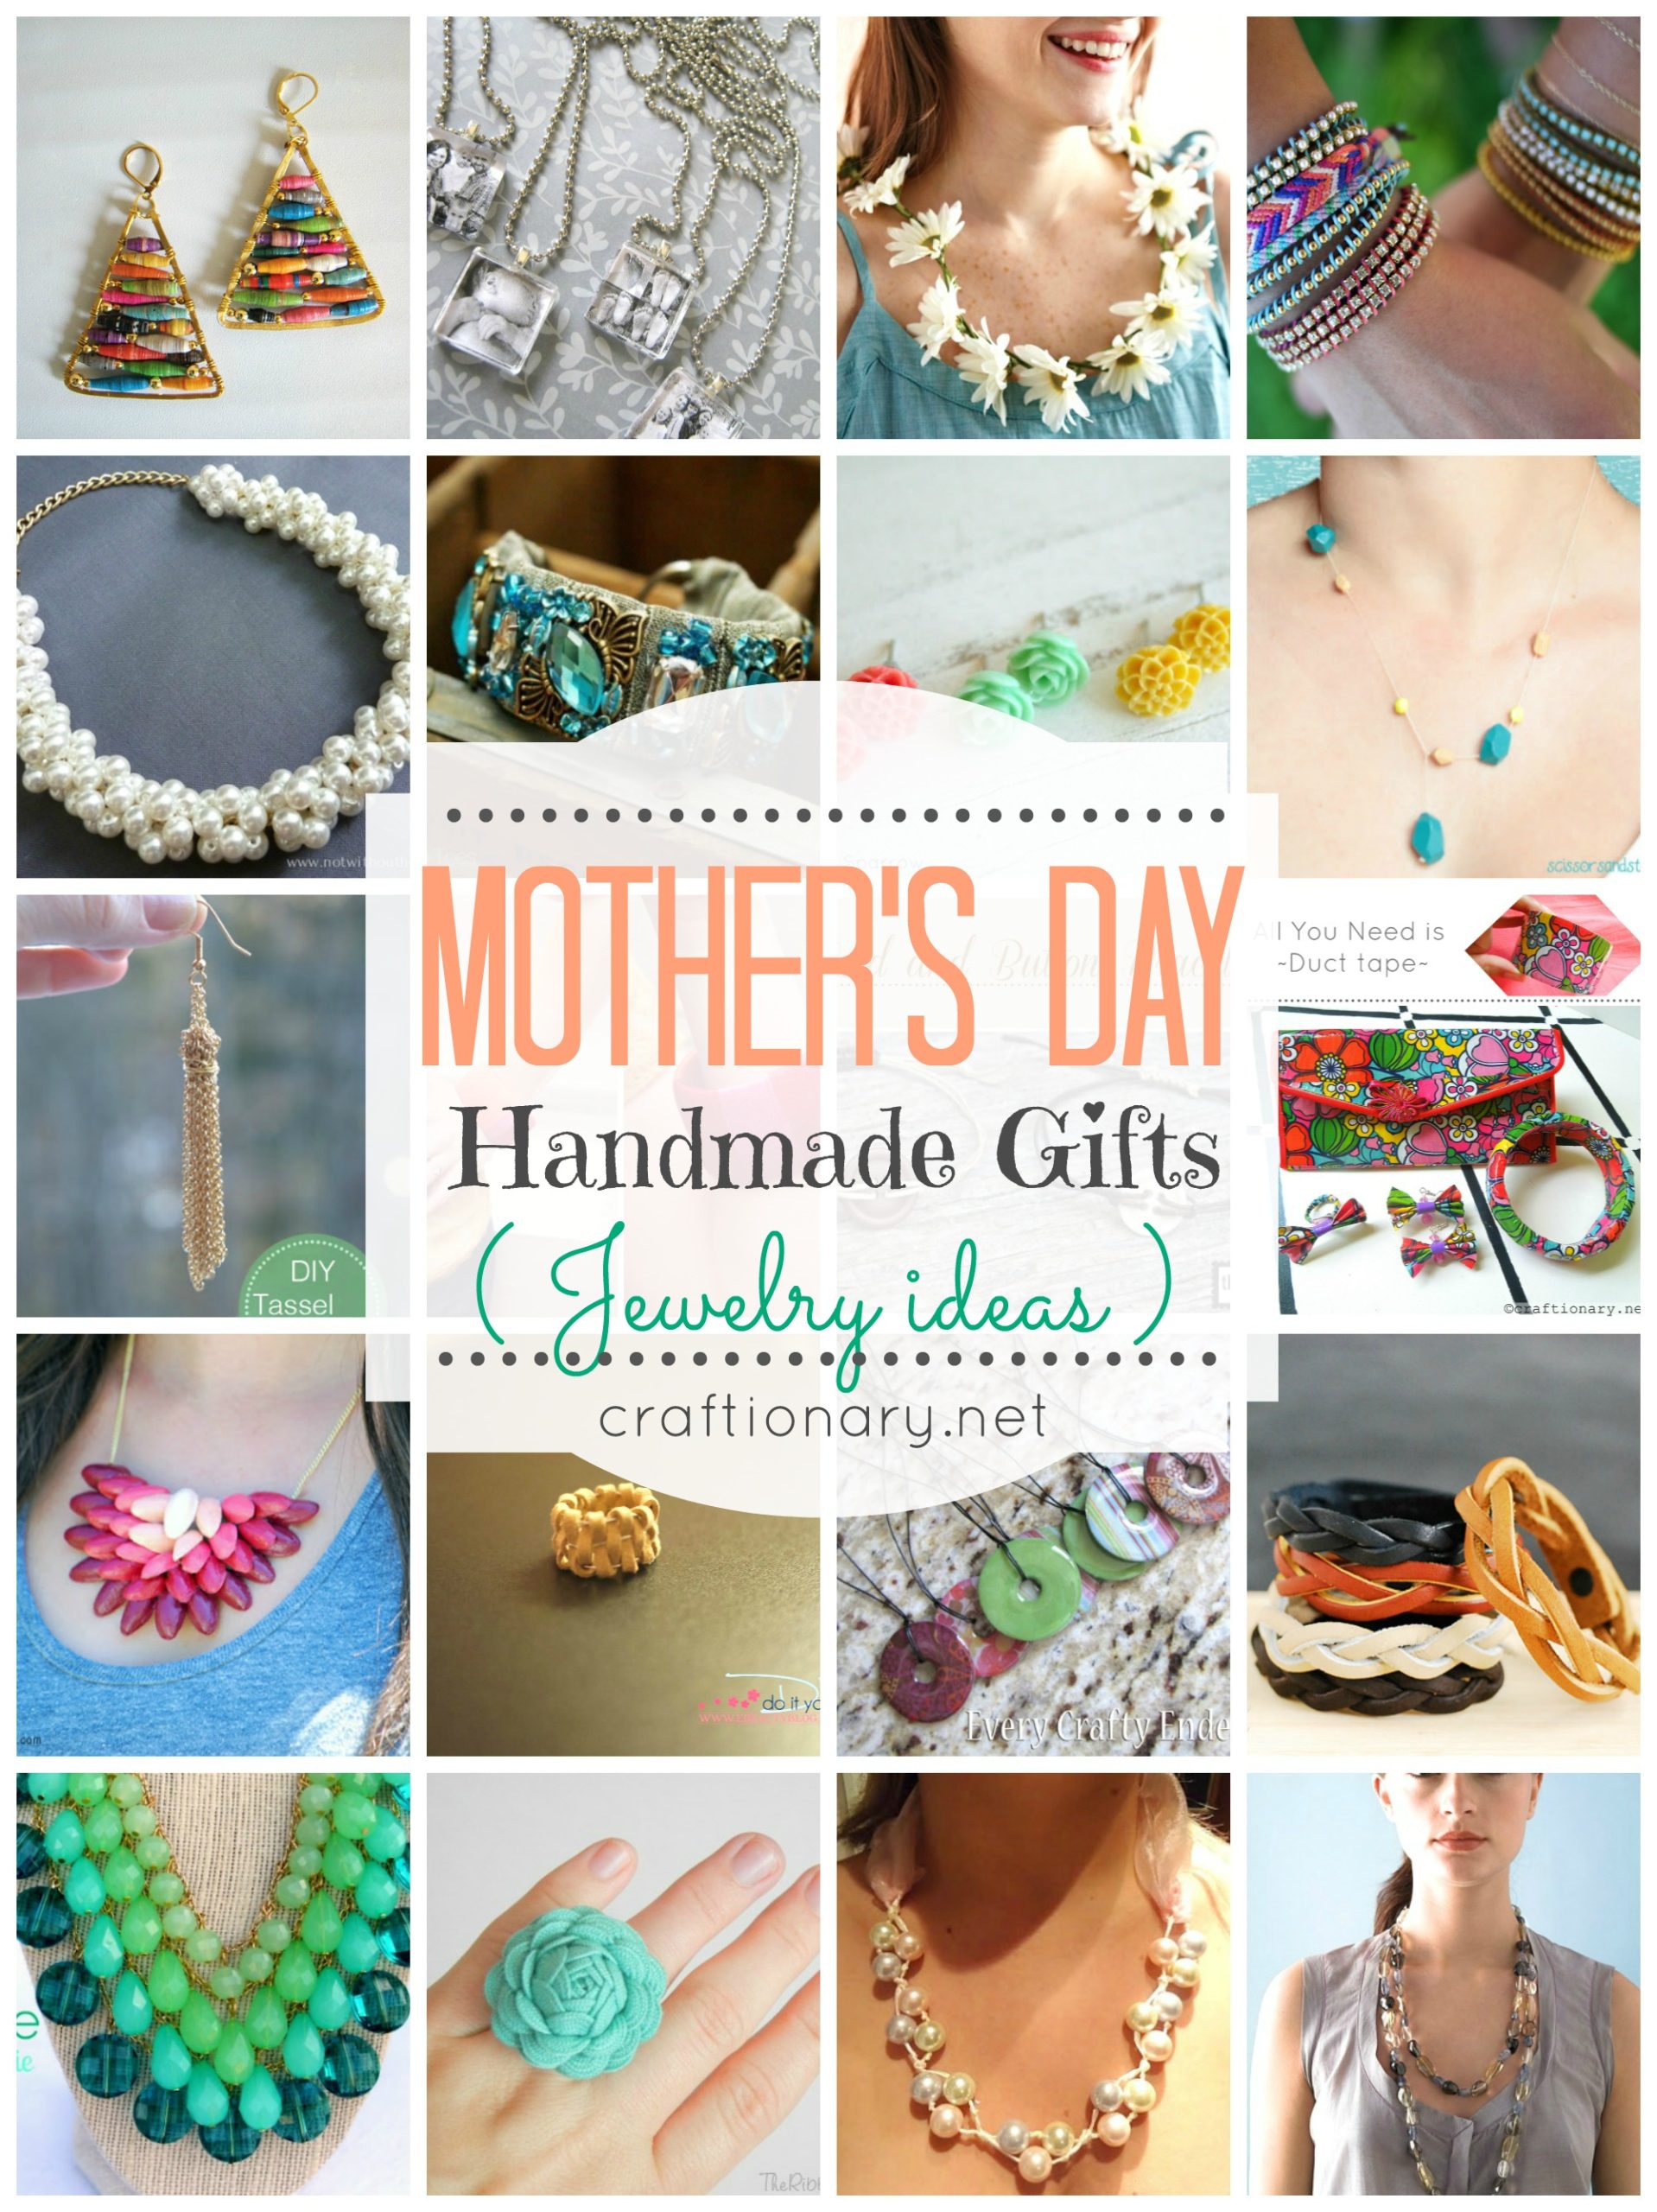 Mother's Day Gift Ideas in Mason Jars - Mason Jar Crafts Love